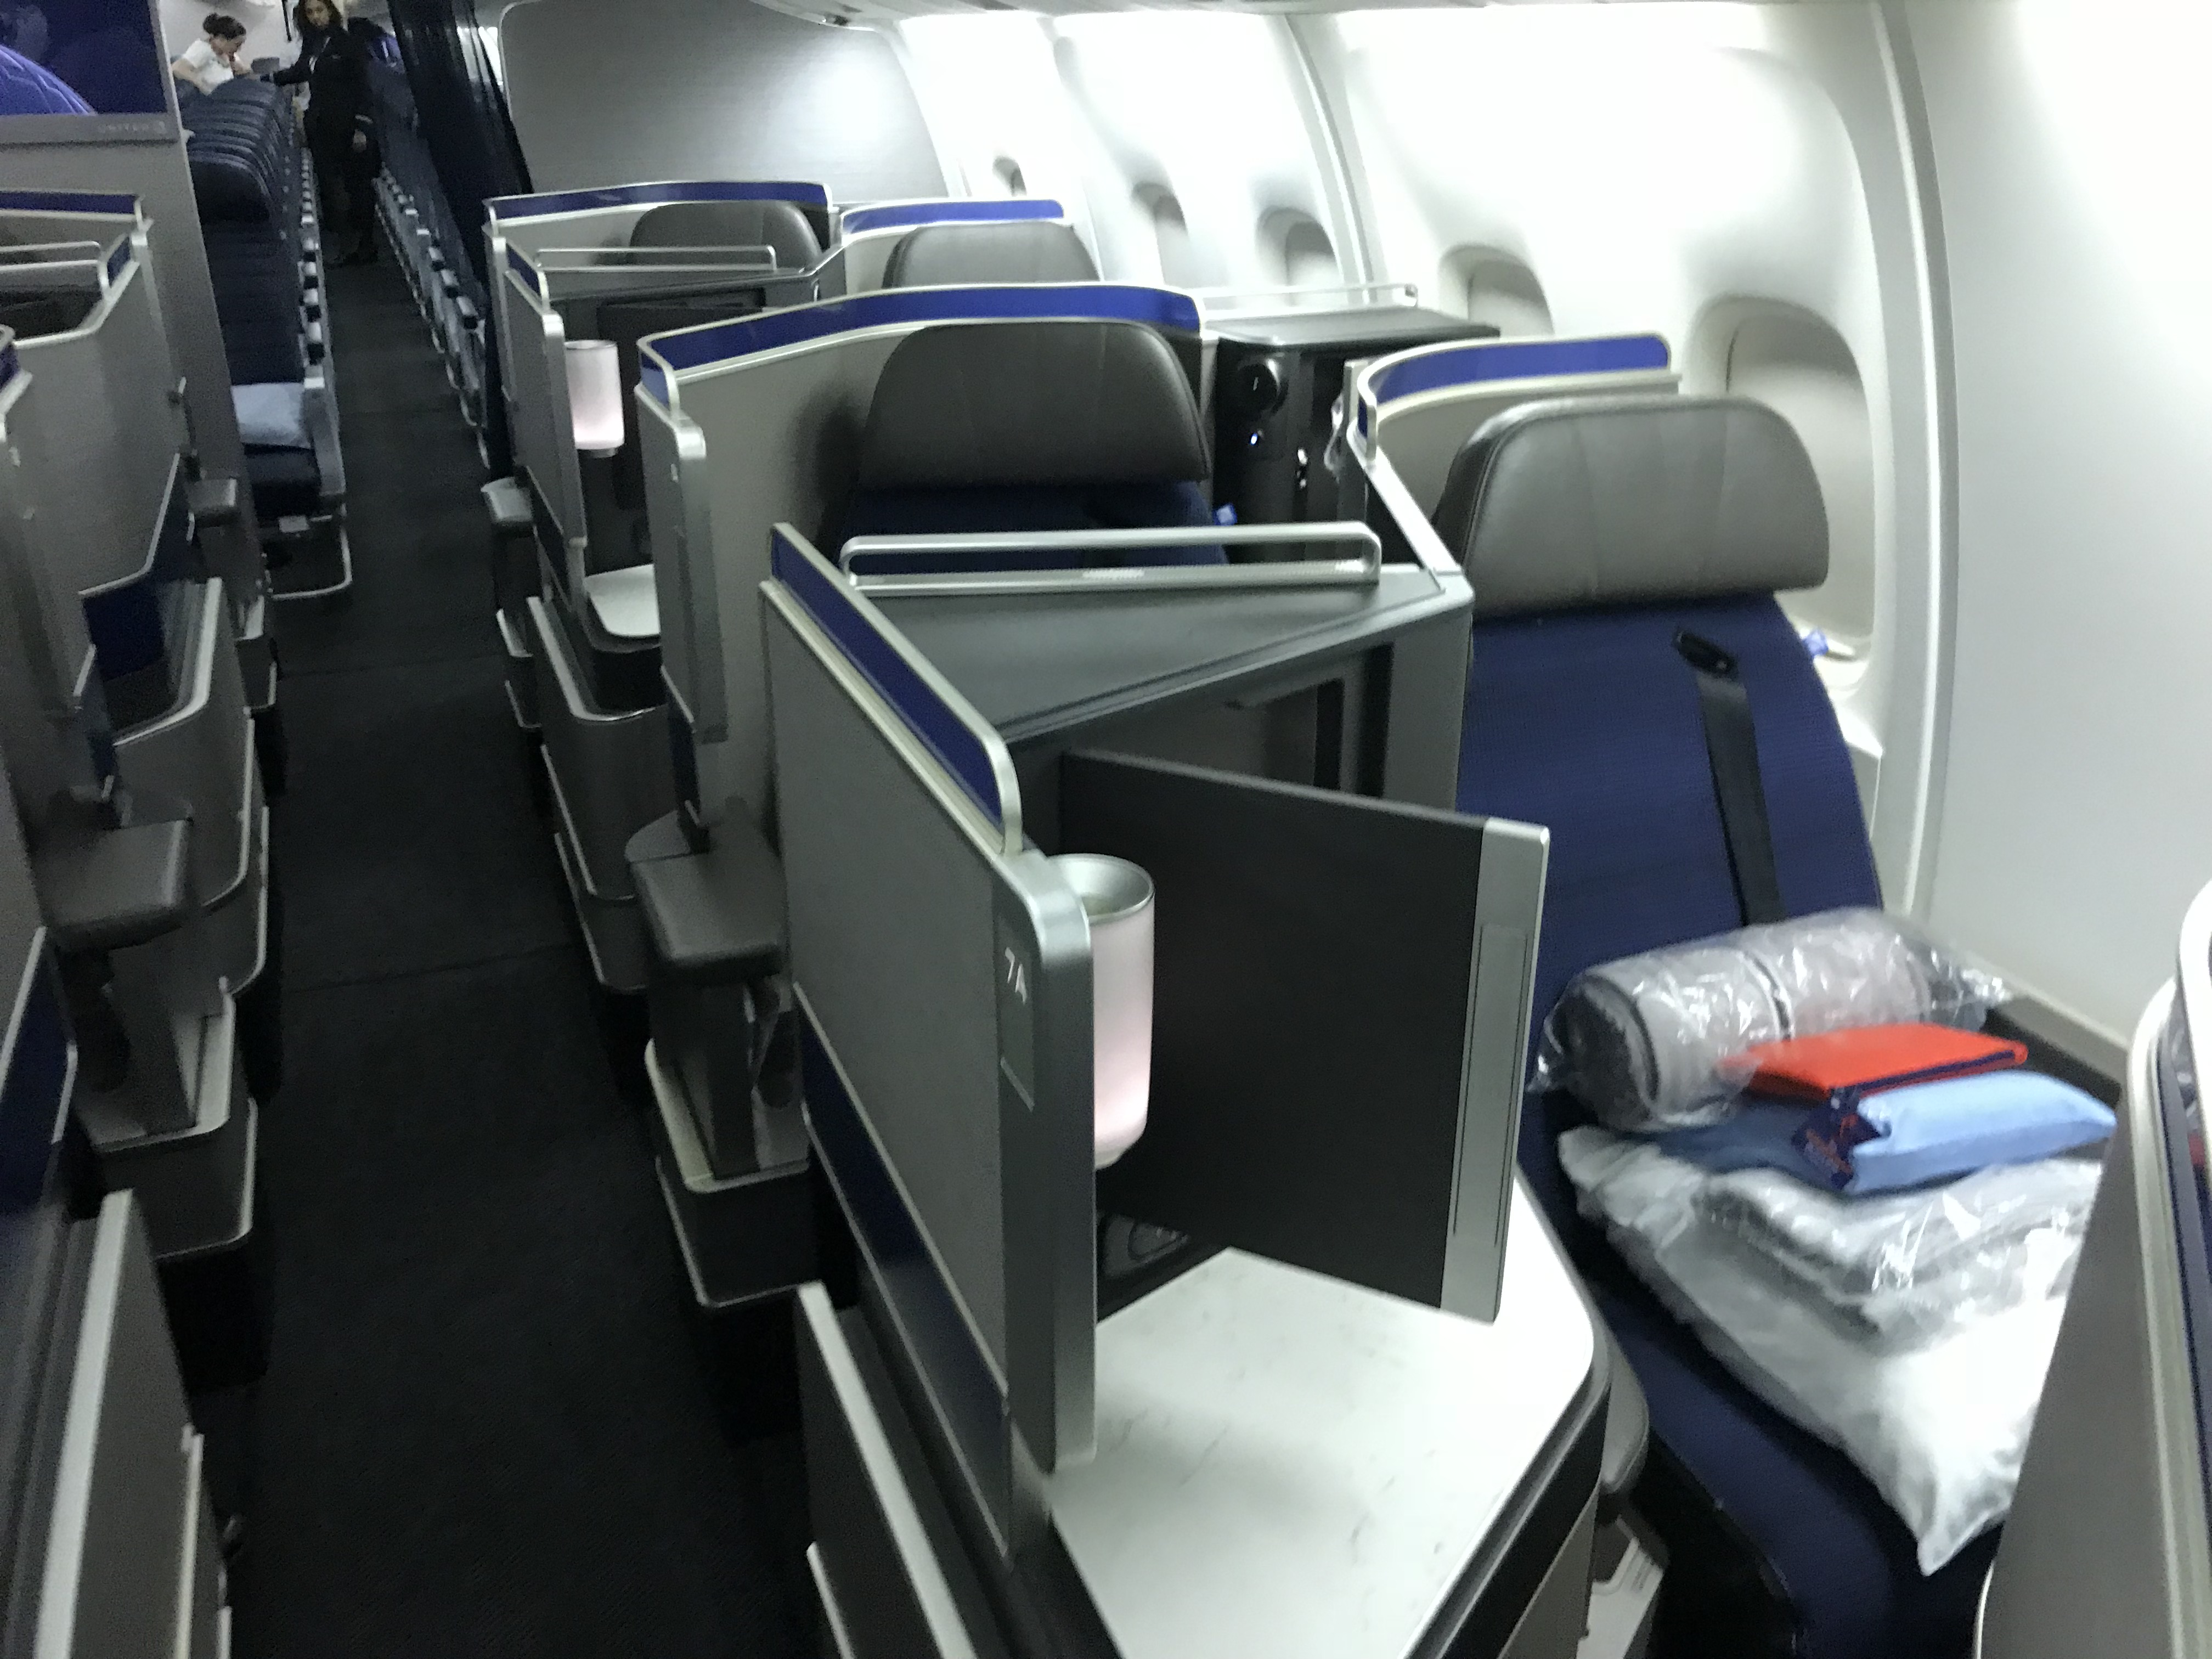 Delta 767-300 Comfort Plus review (don't call it Premium Economy